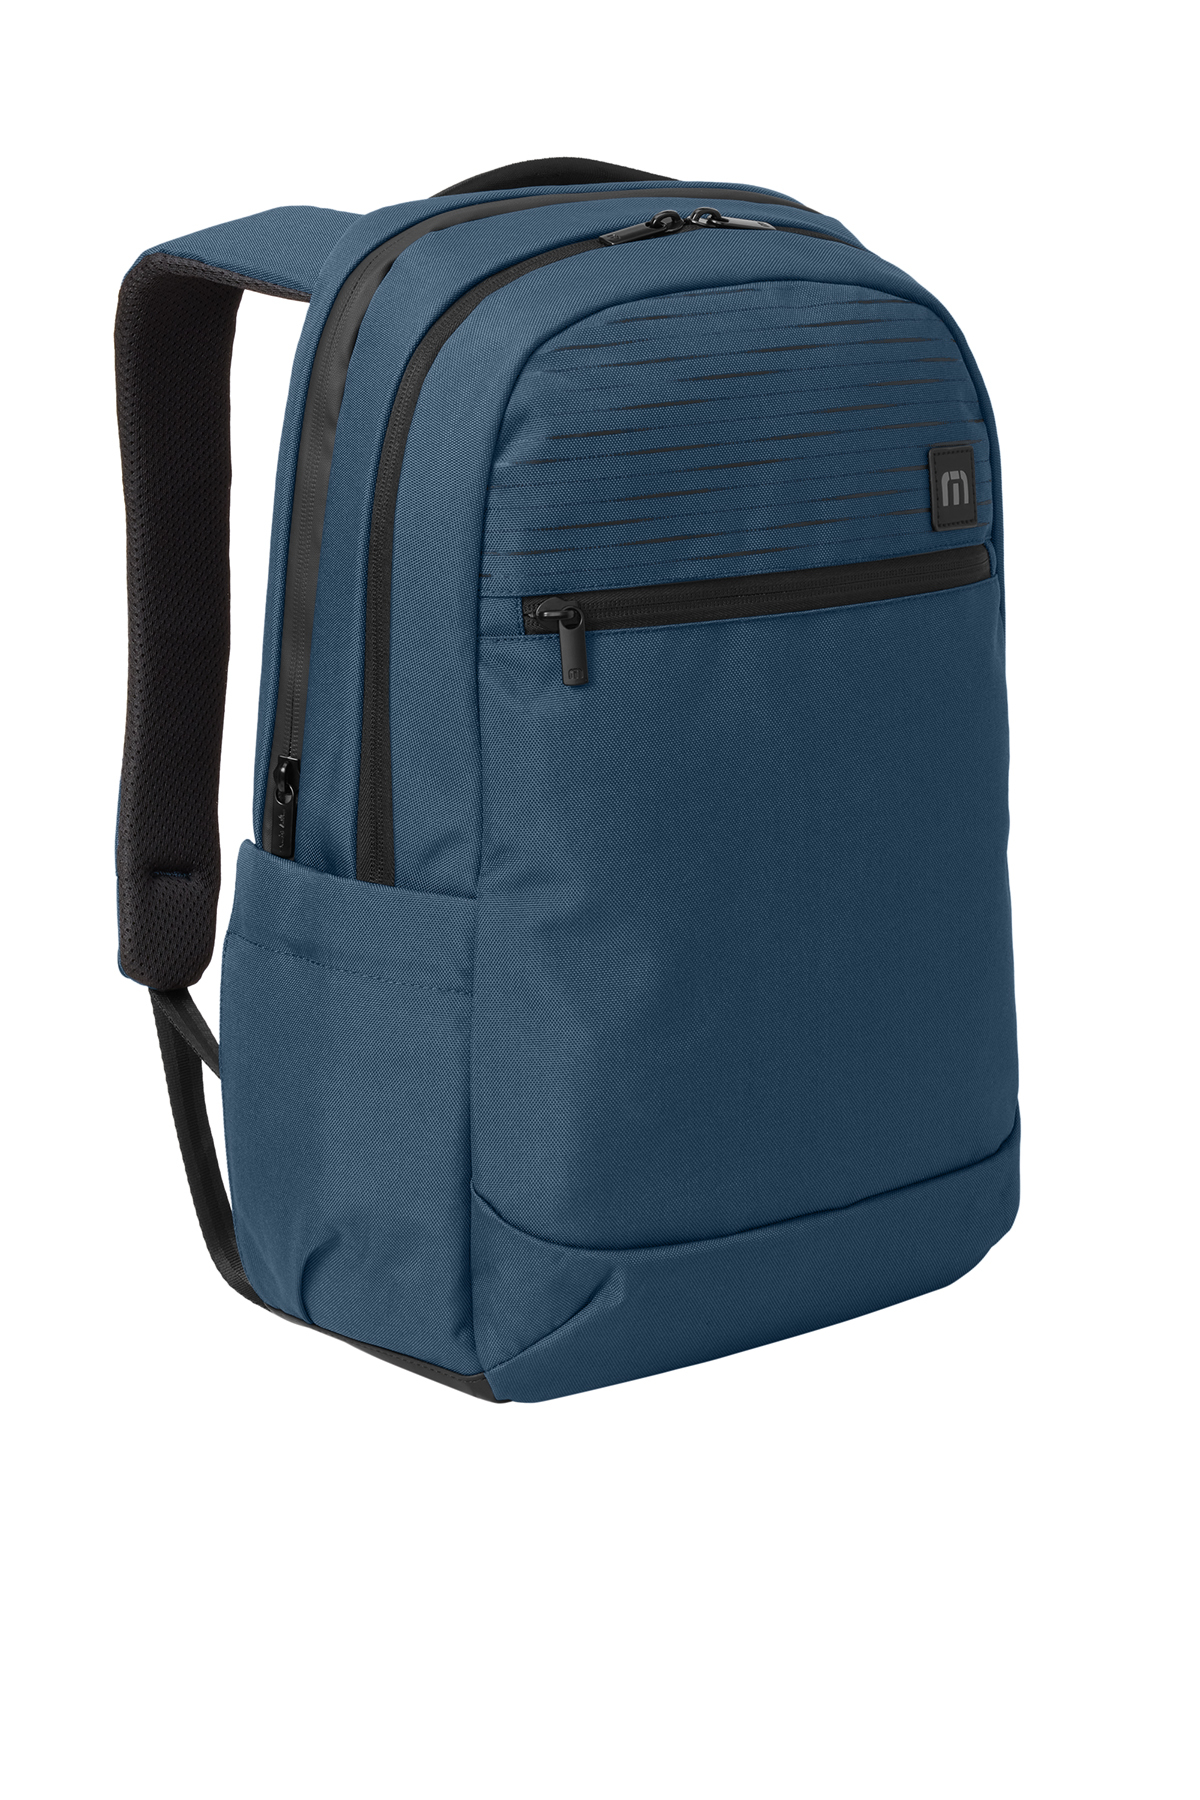 TravisMathew Approach Backpack | Product | SanMar